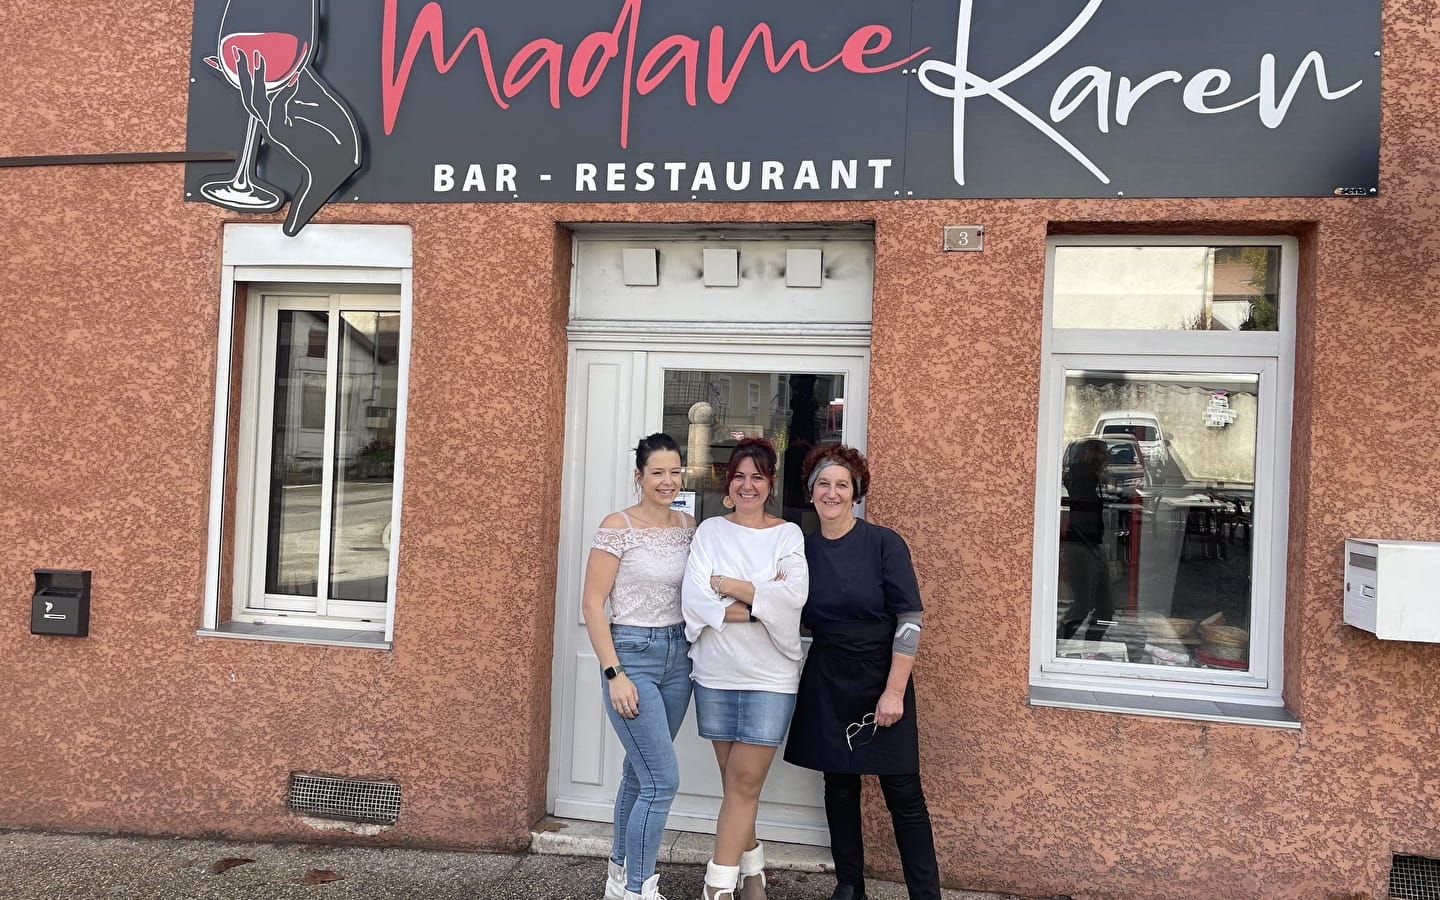 Bar restaurant 'Madame Karen'